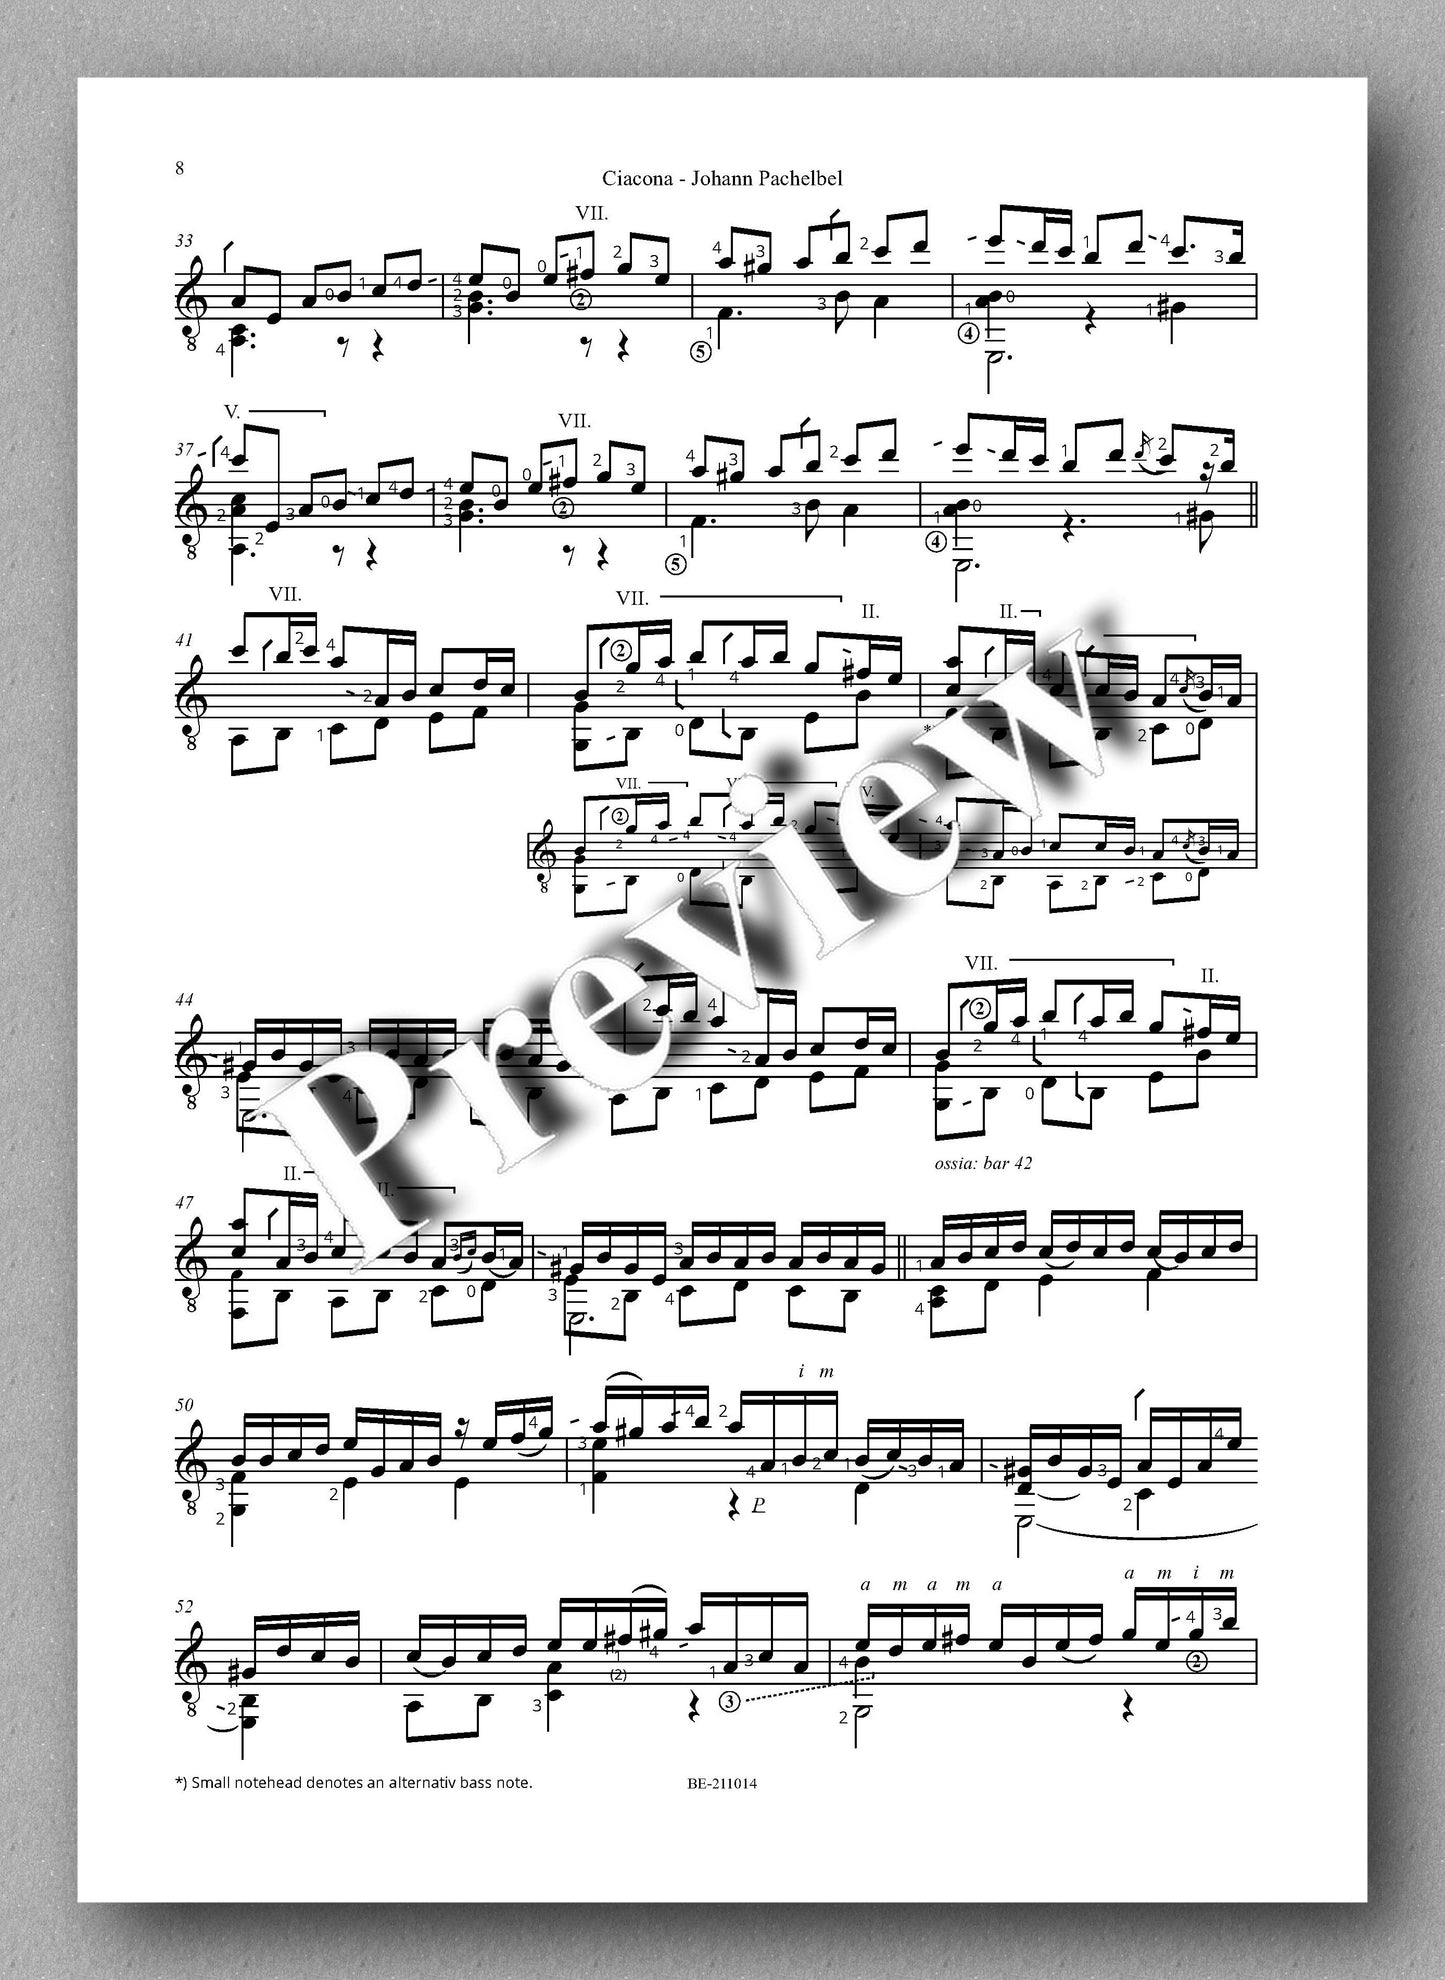 Pachelbel-Stevens, Ciacona - music score 2